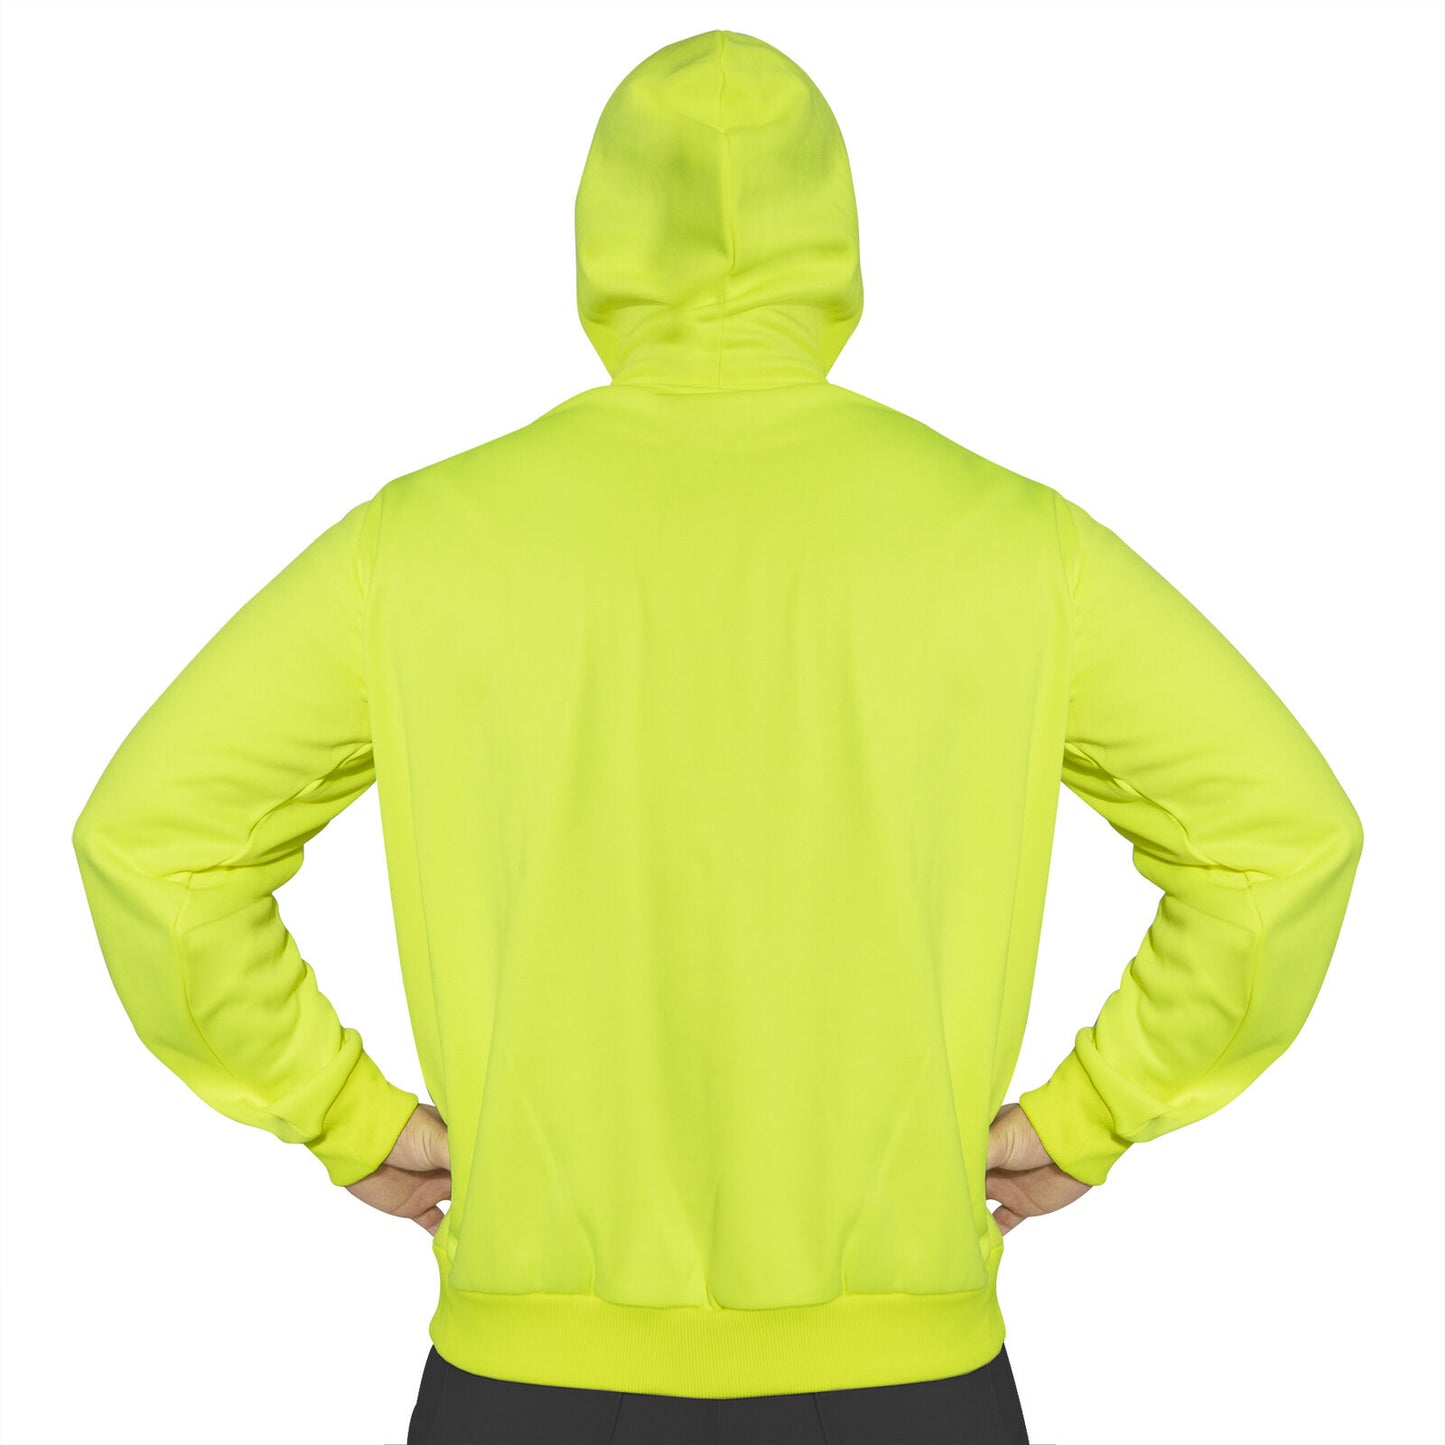 Mens Safety Green High-Vis Performance Hoodie Pullover Sweatshirt